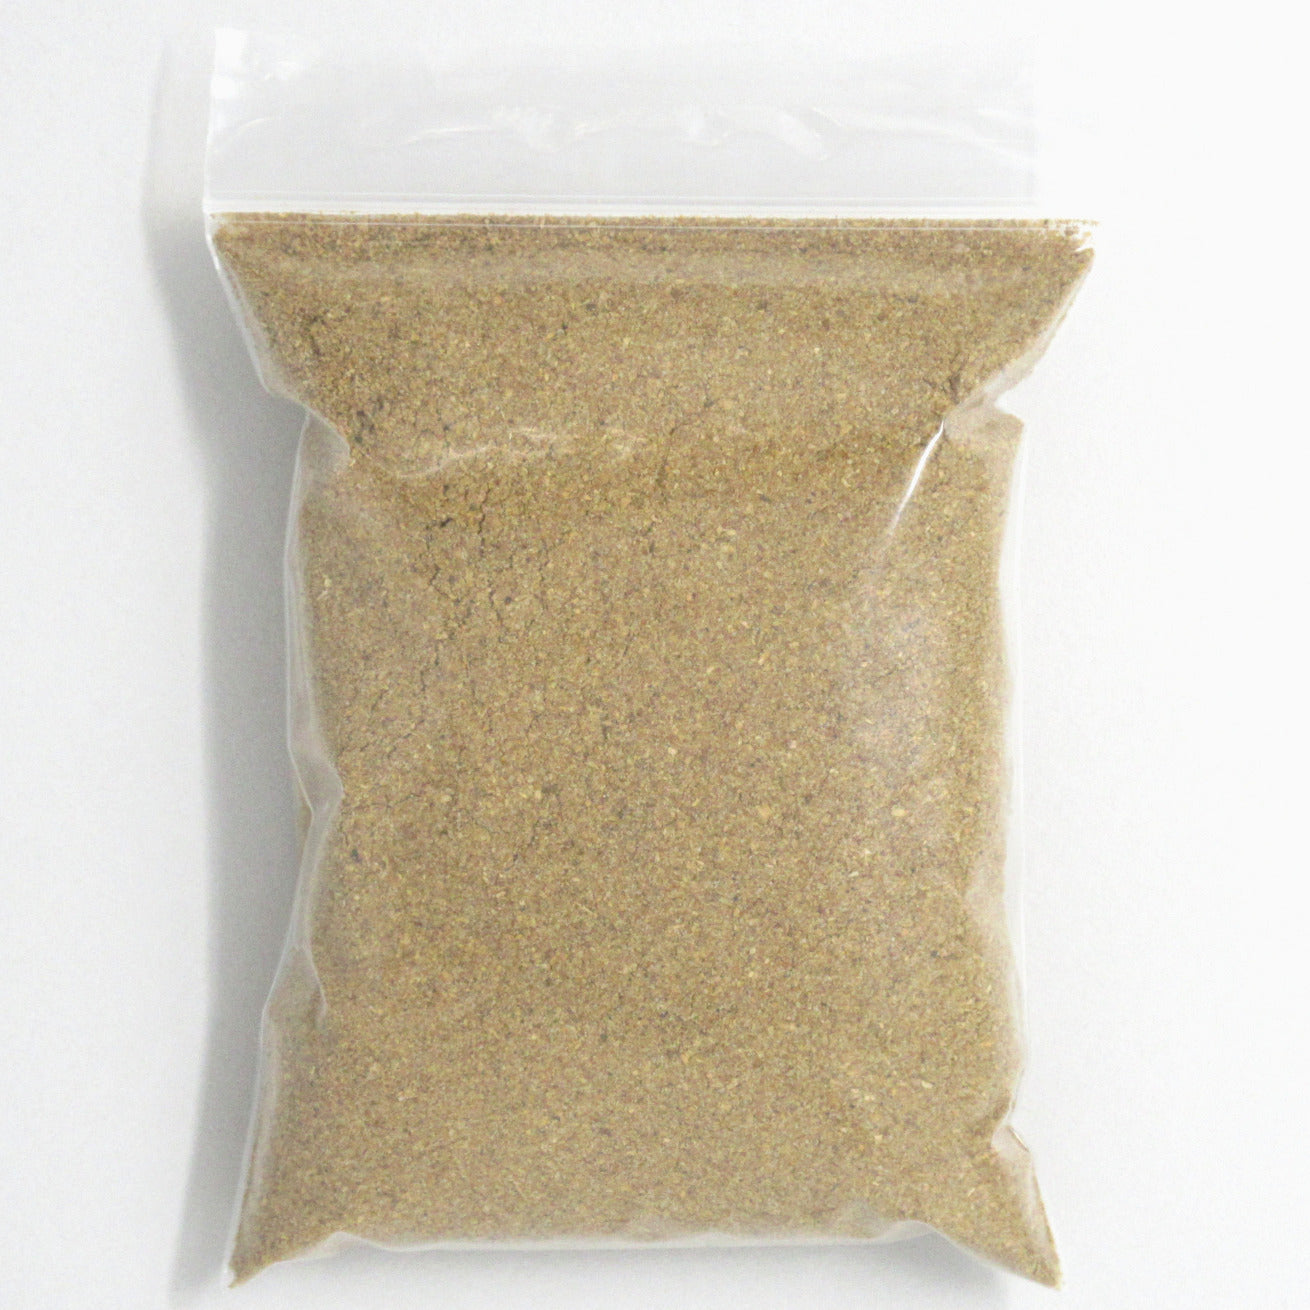 Flour Barrel product image - Coriander - Ground